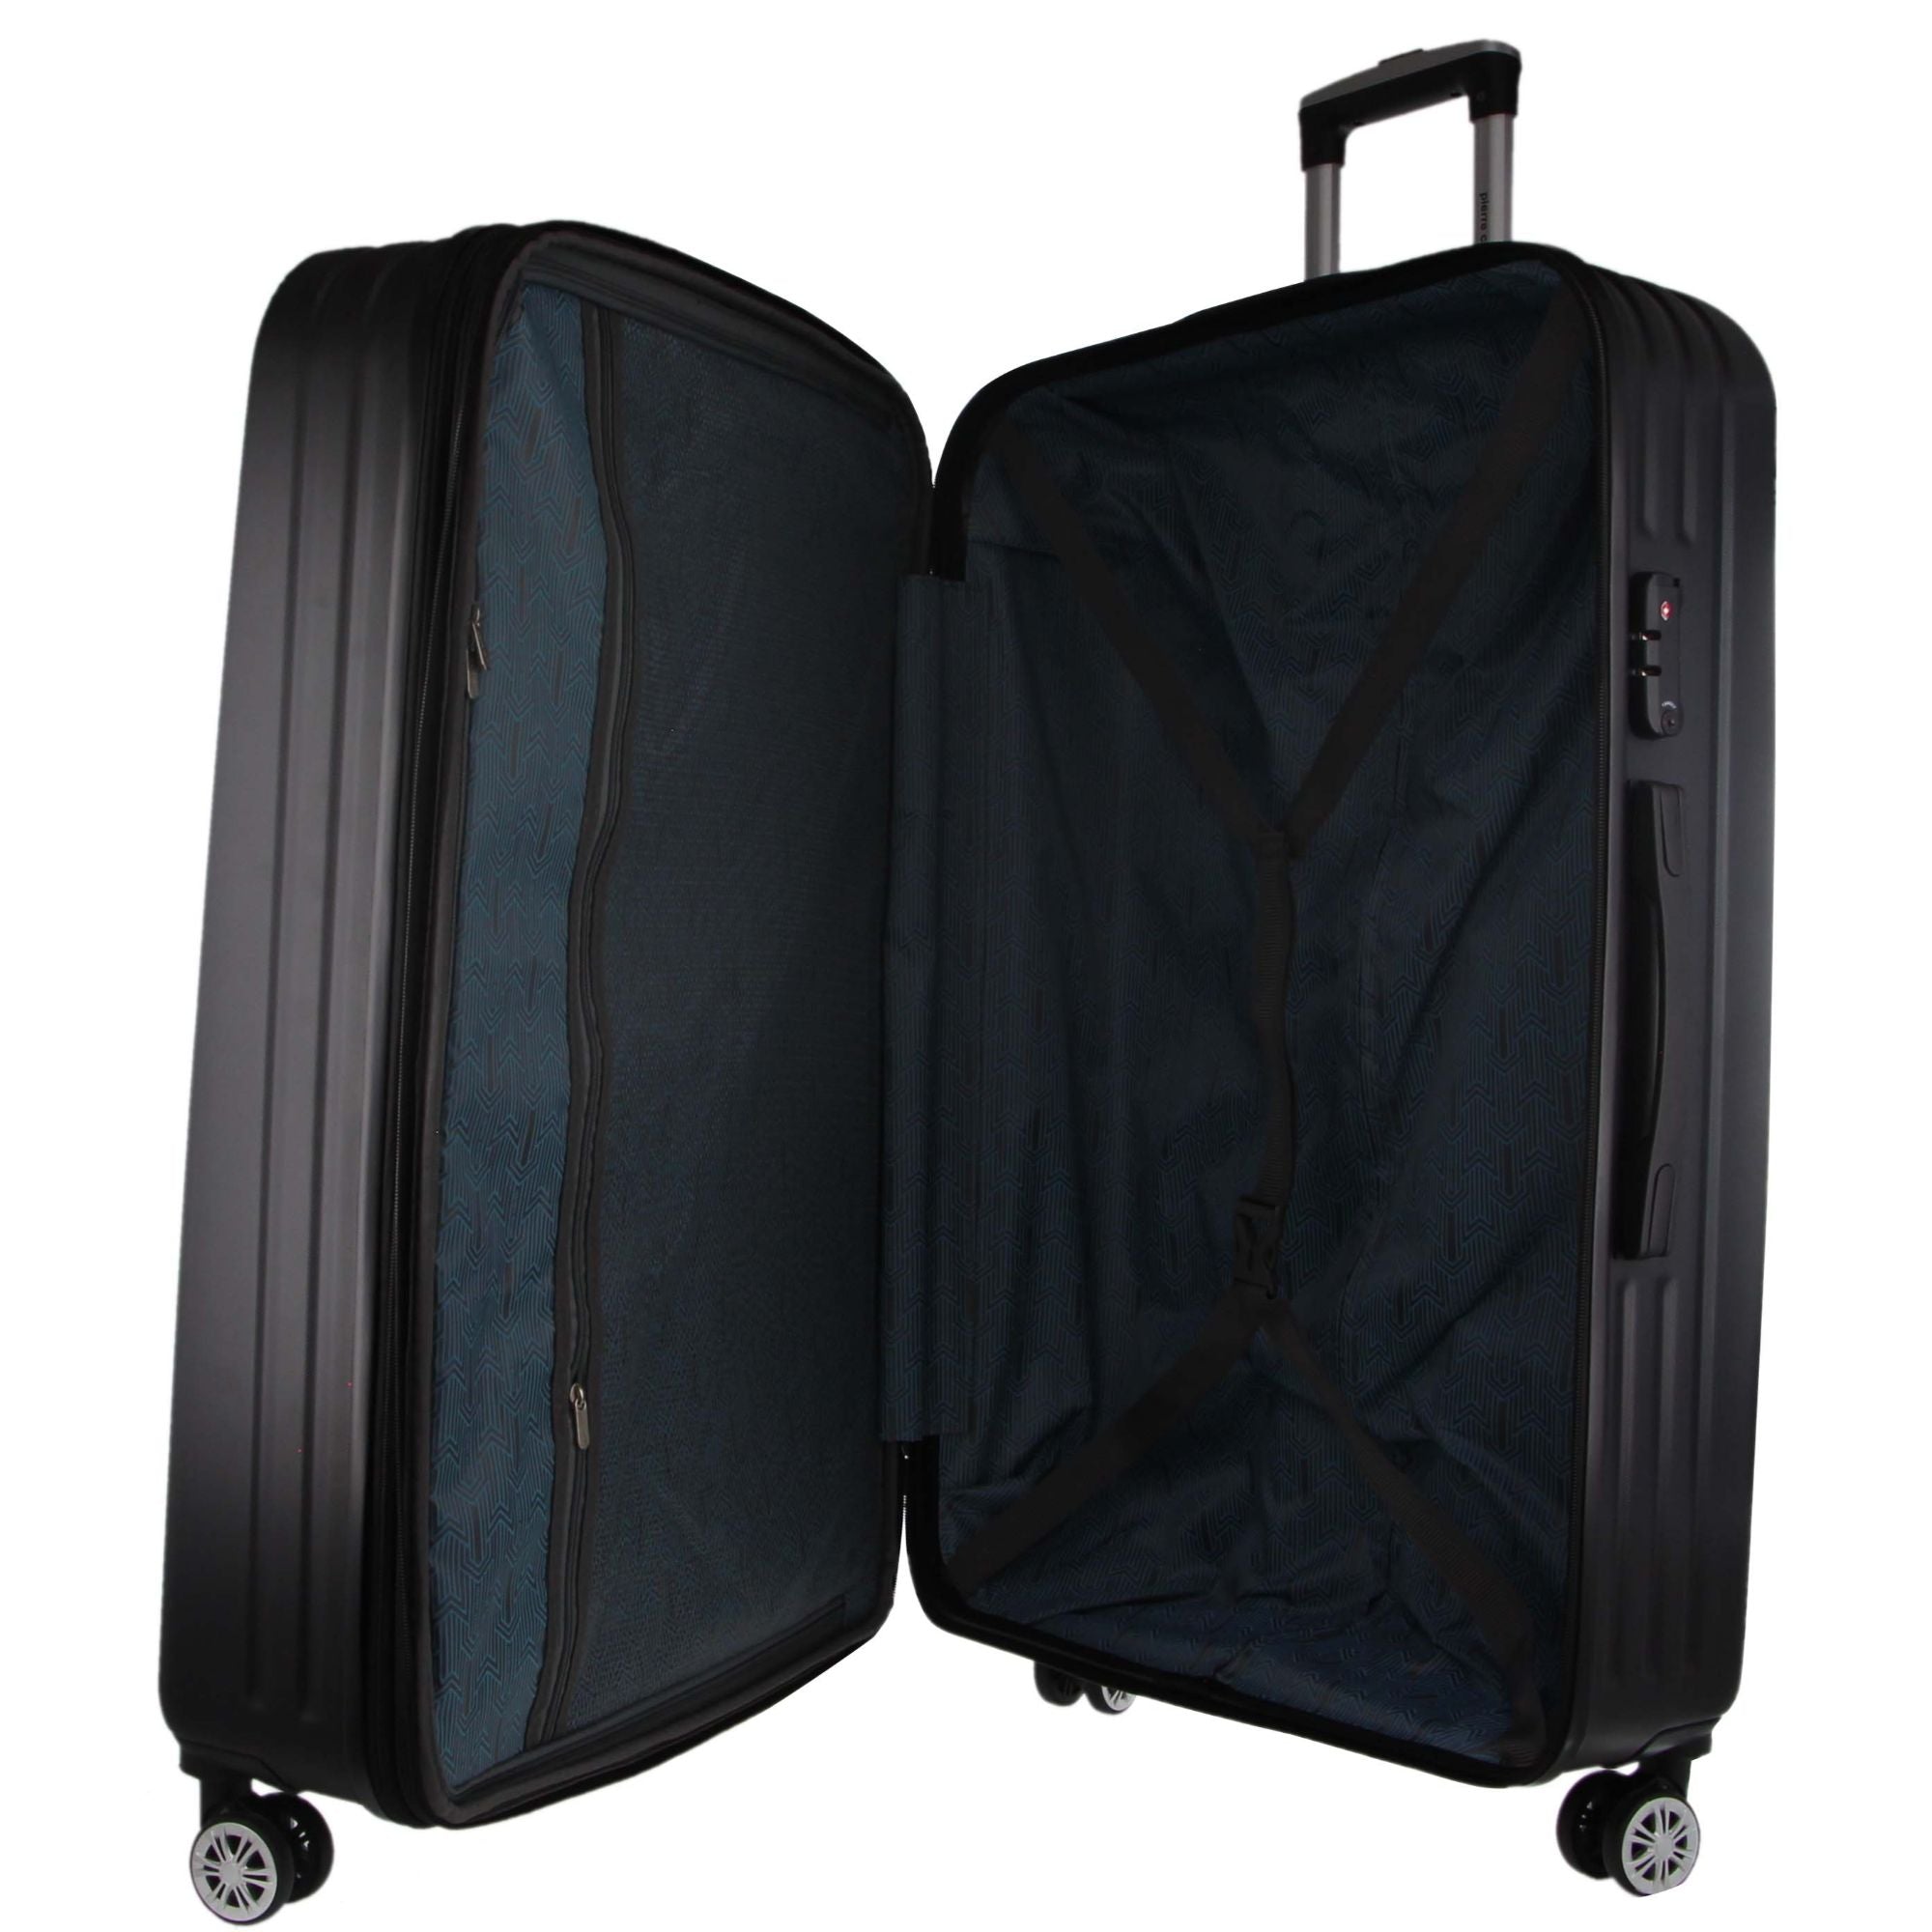 Pierre Cardin Hard Shell 3-Piece Luggage Set in Black